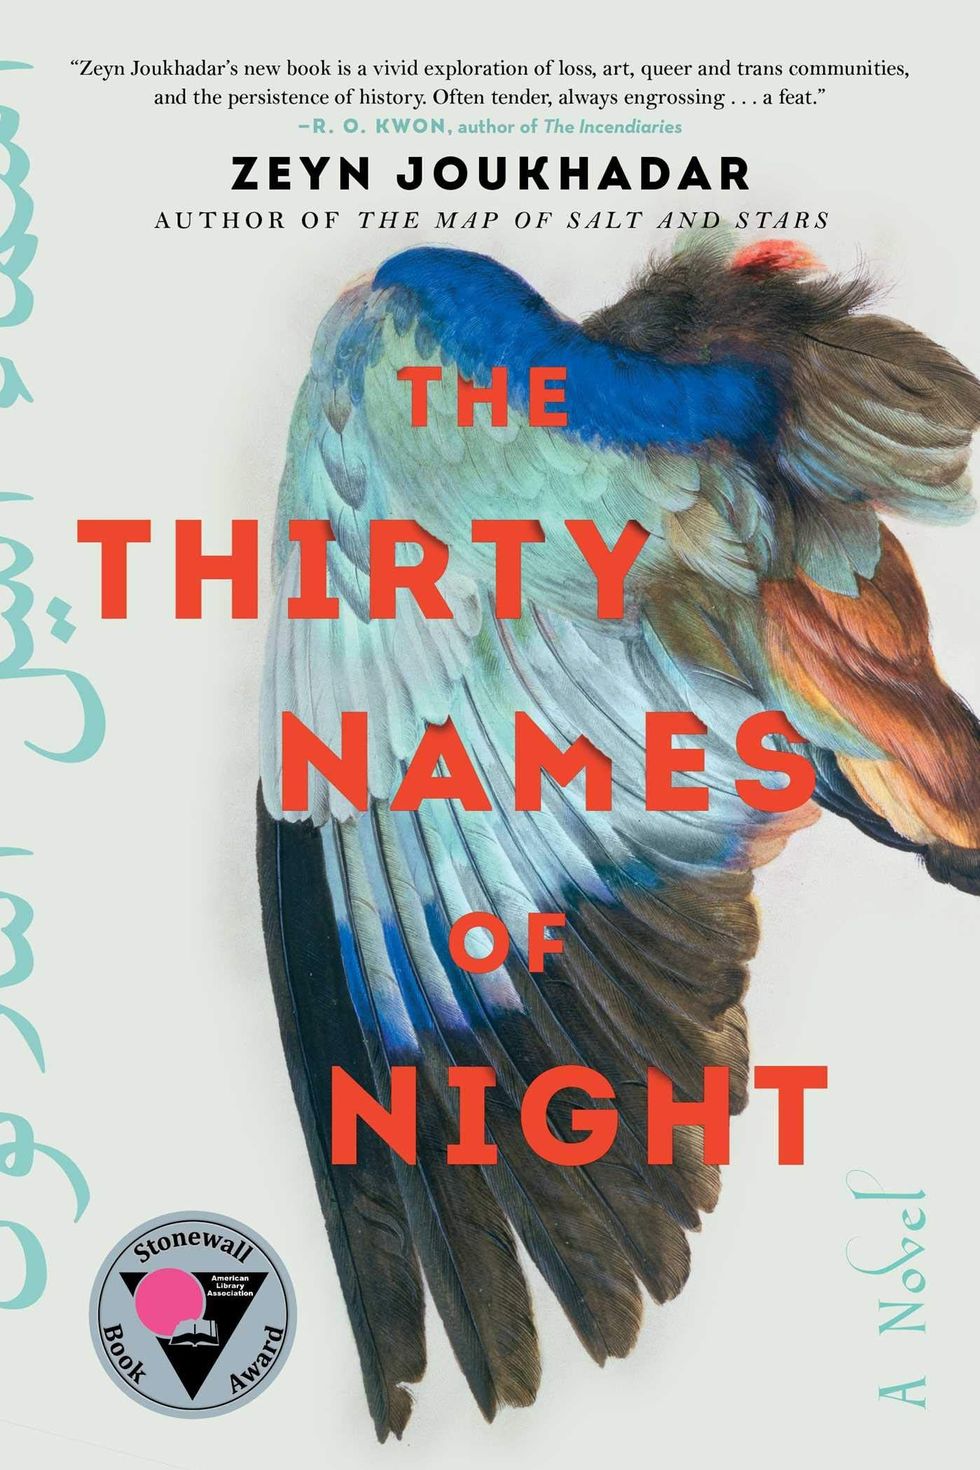 ‘The Thirty Names of Night: A Novel’ by Zeyn Joukhadar